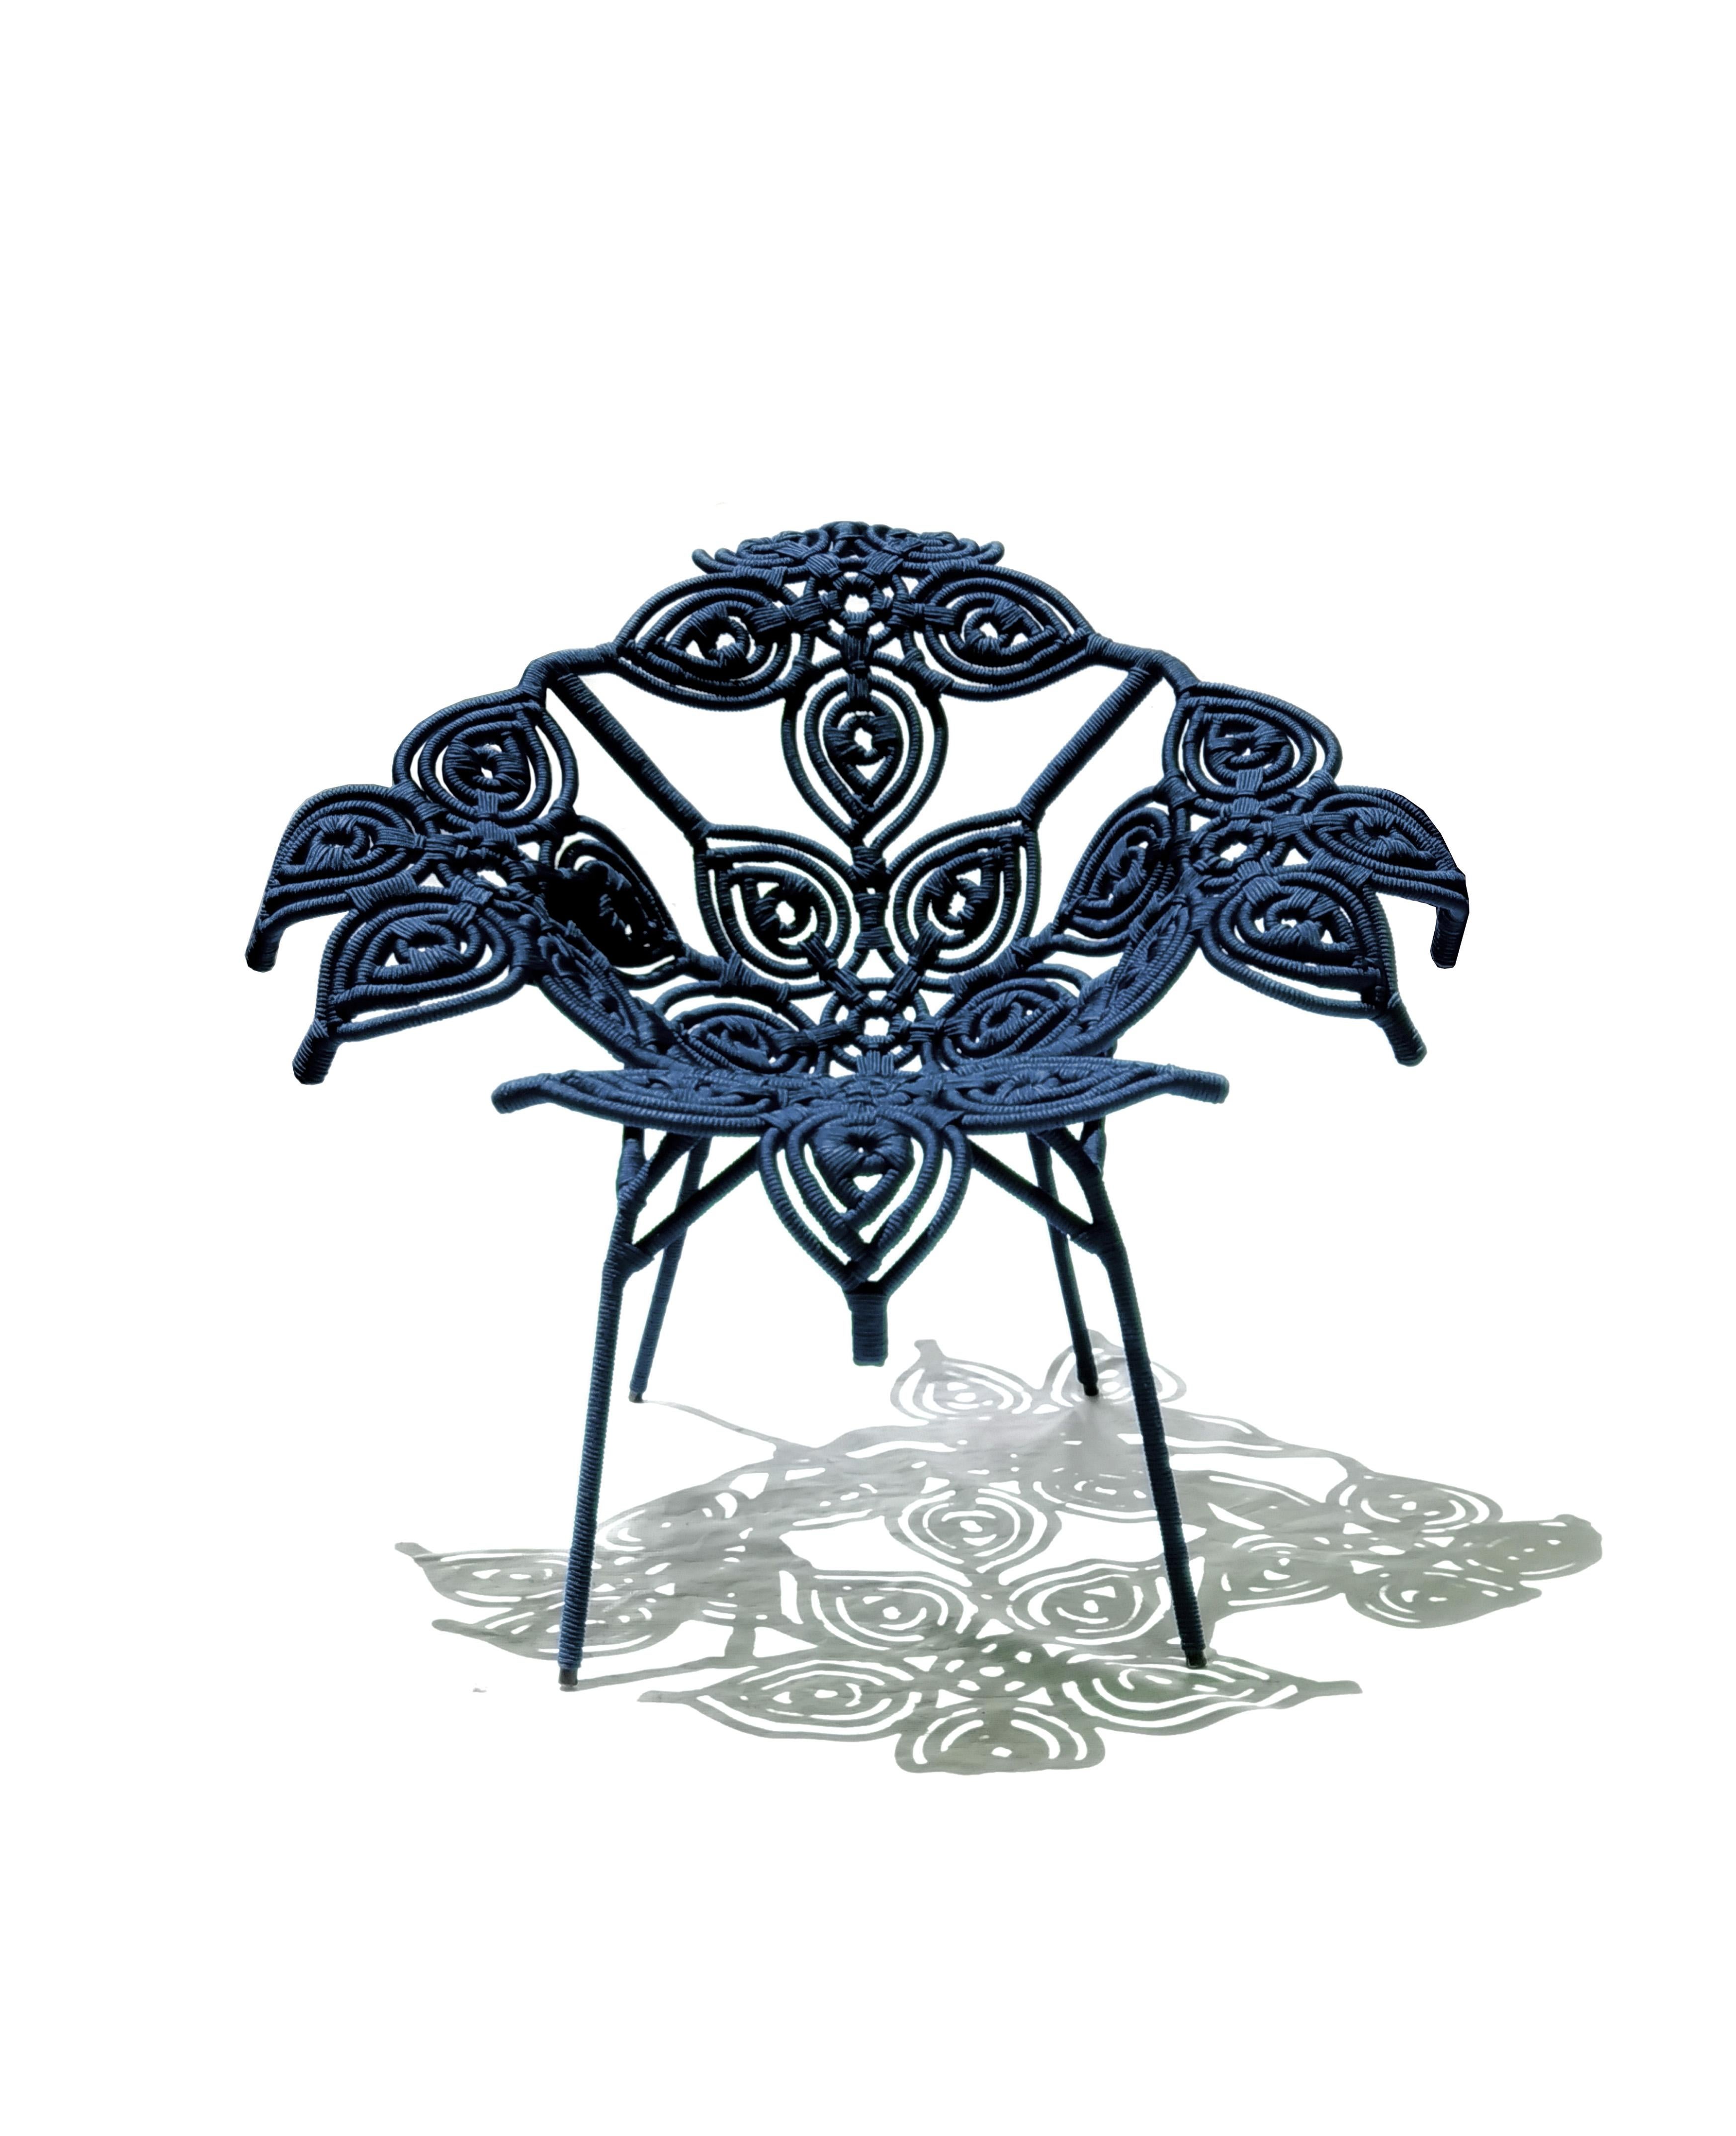 Brazilian Chita Chair For Sale